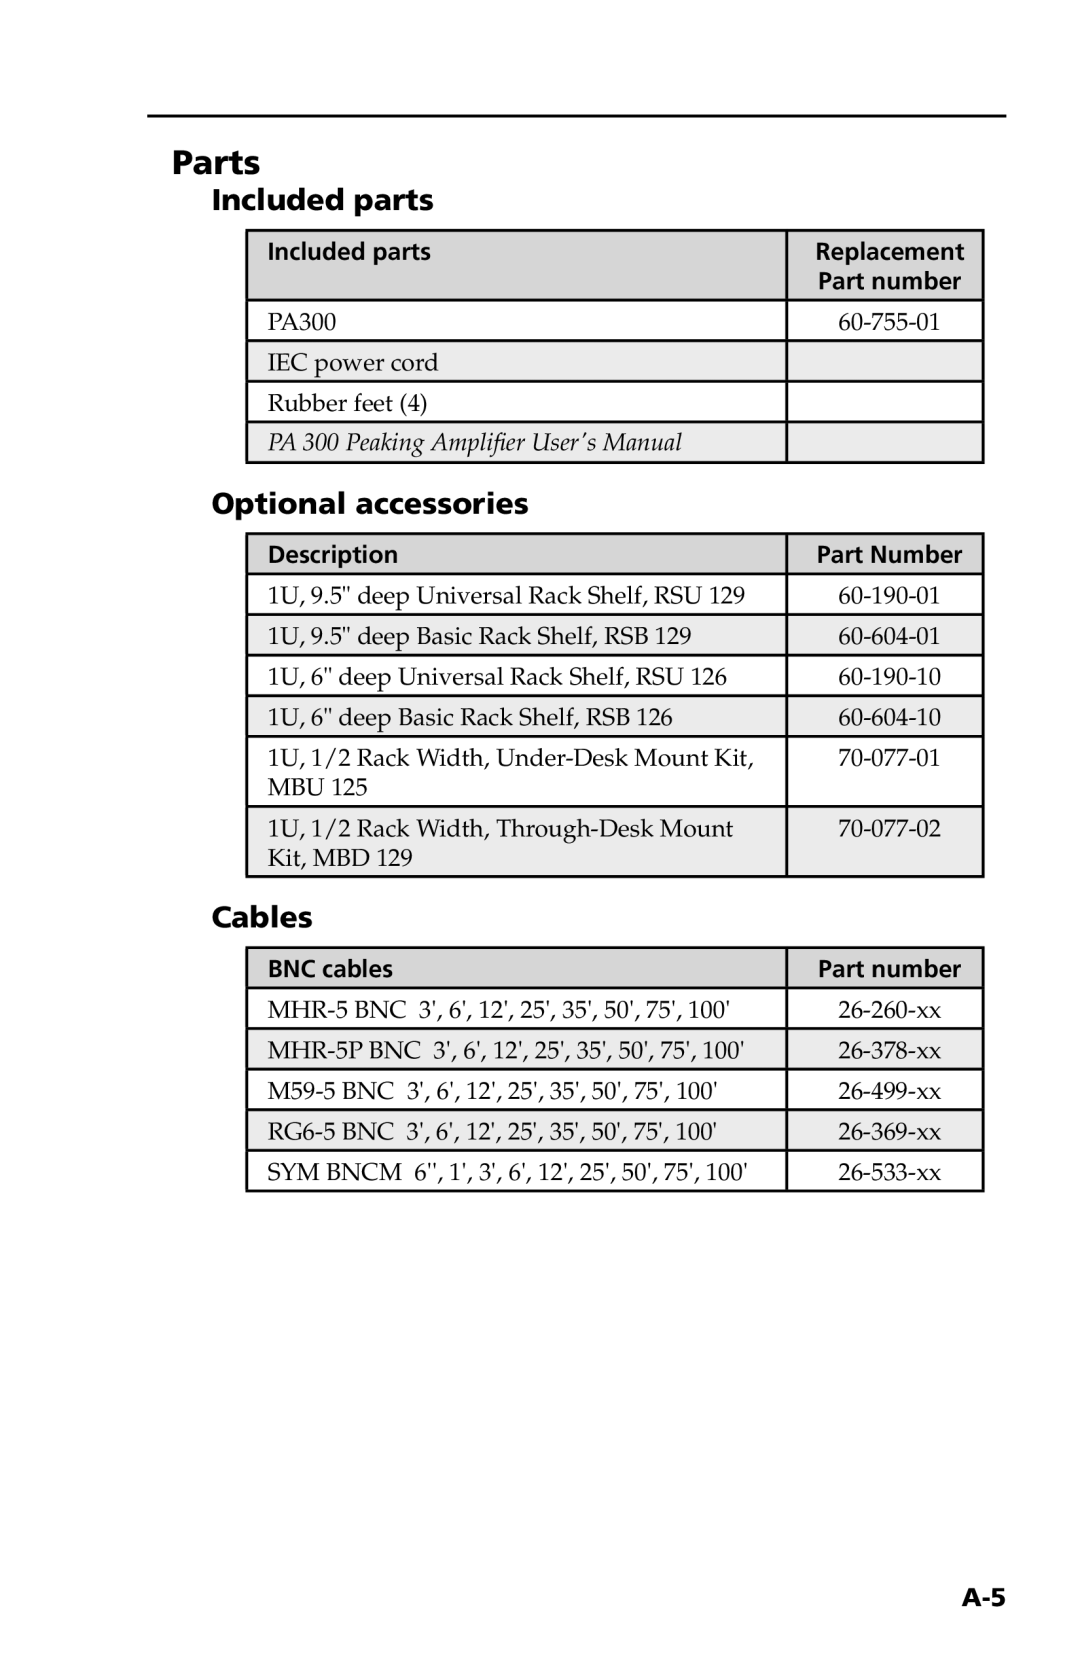 Extron electronic PA 300 Parts, Included parts, Optional accessories, Cables, Replacement, Description, Part Number 